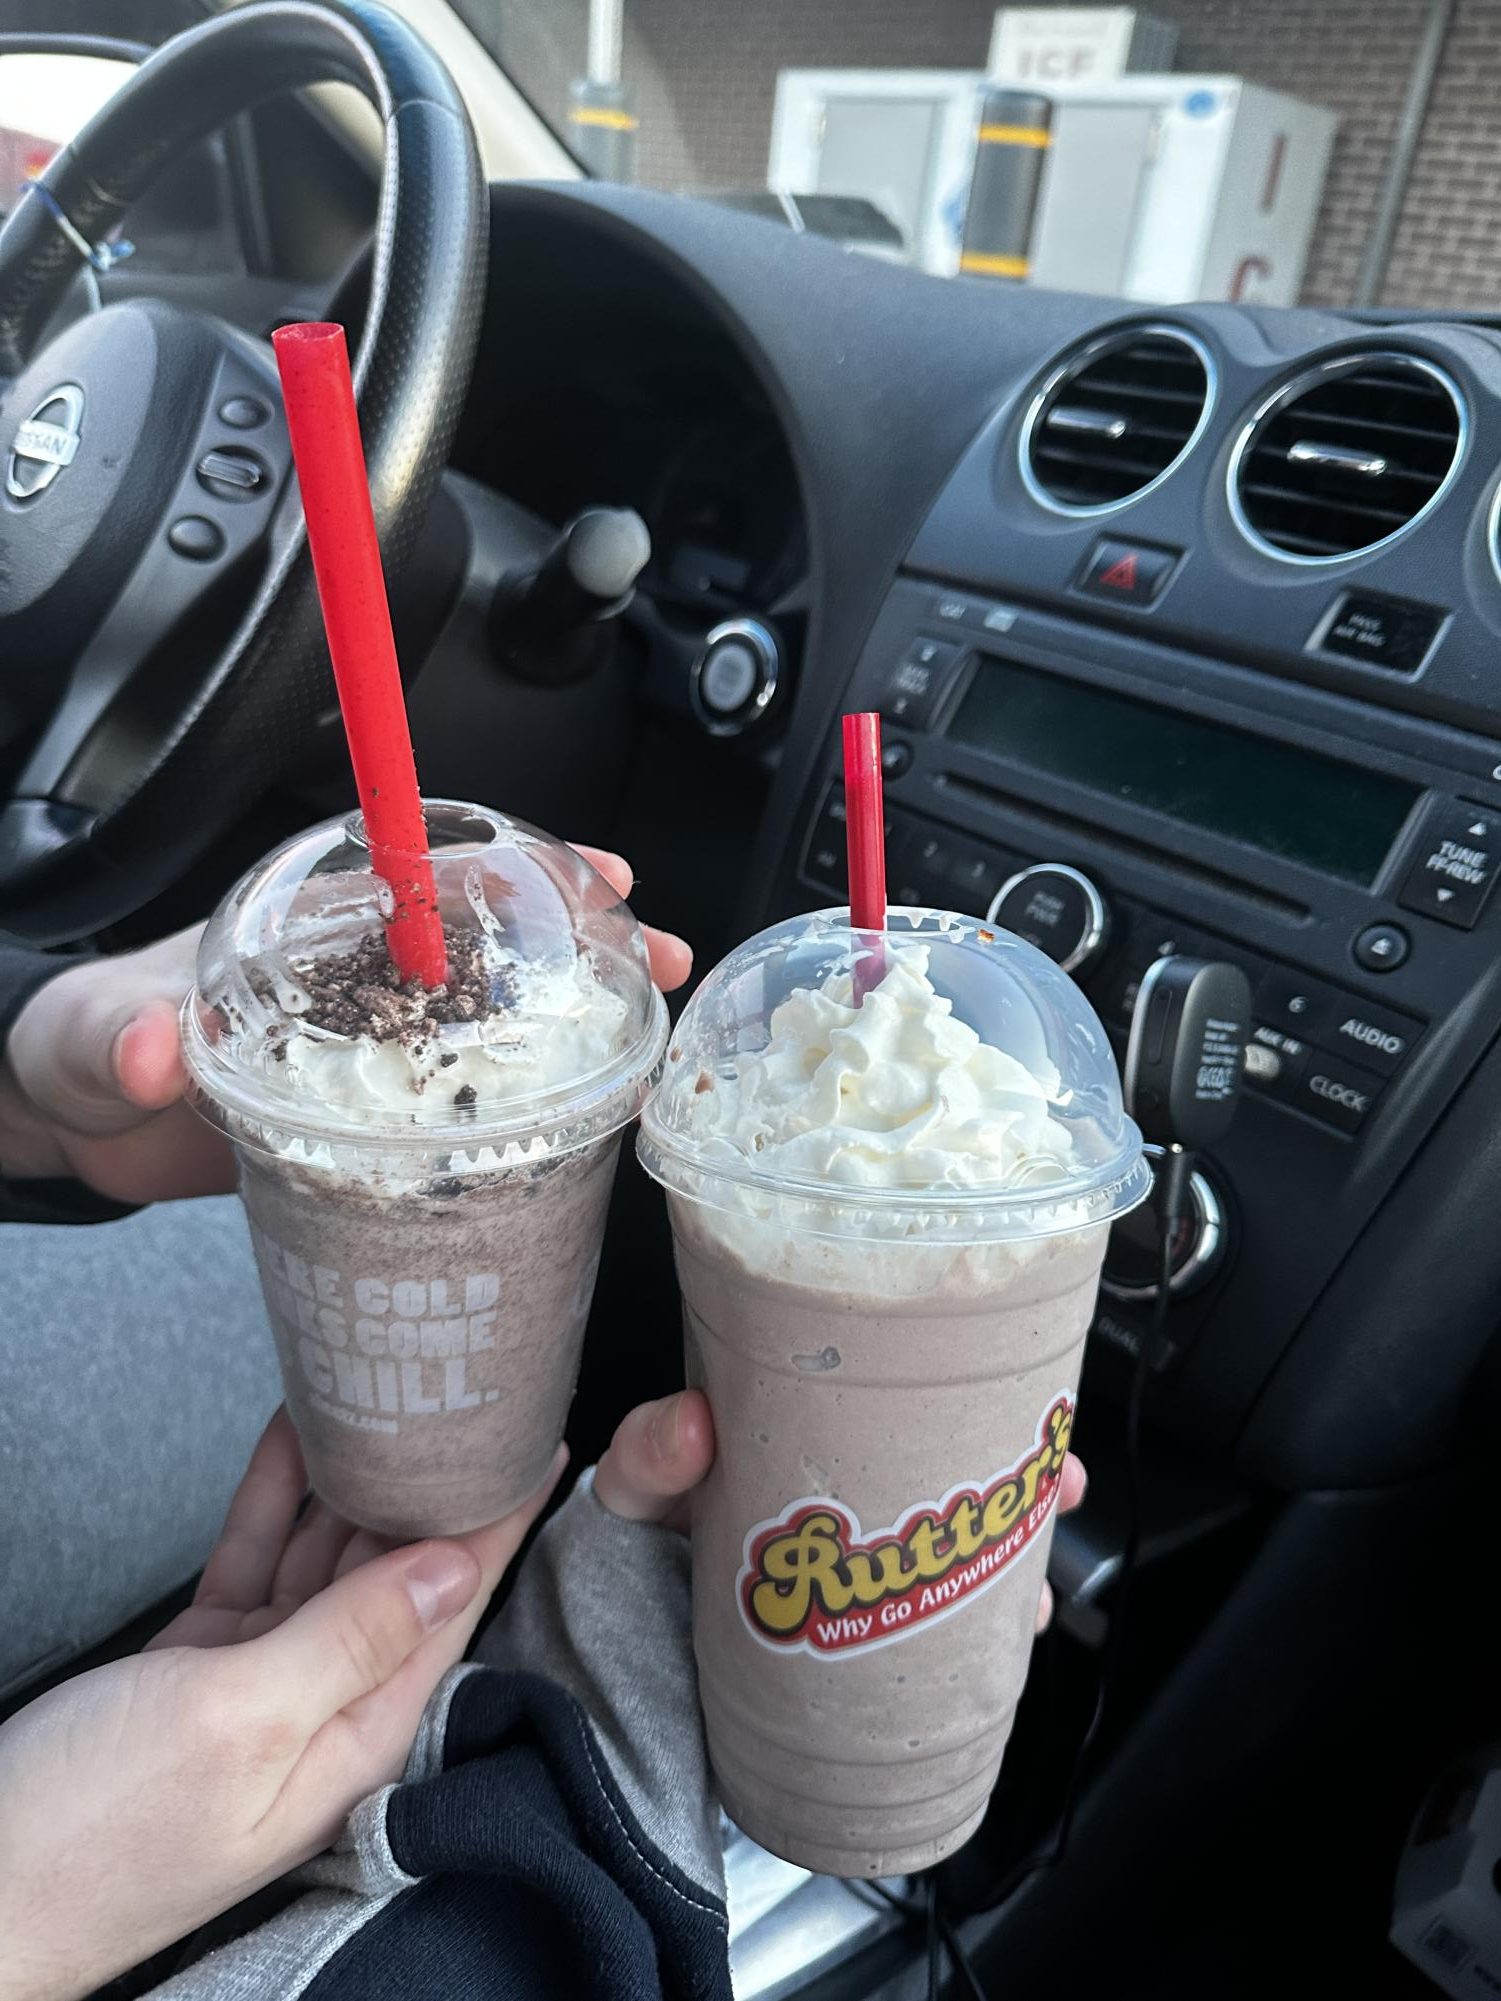 Milkshakes. We got two regular-sized Cookies ‘n Cream shakes and judged them both.